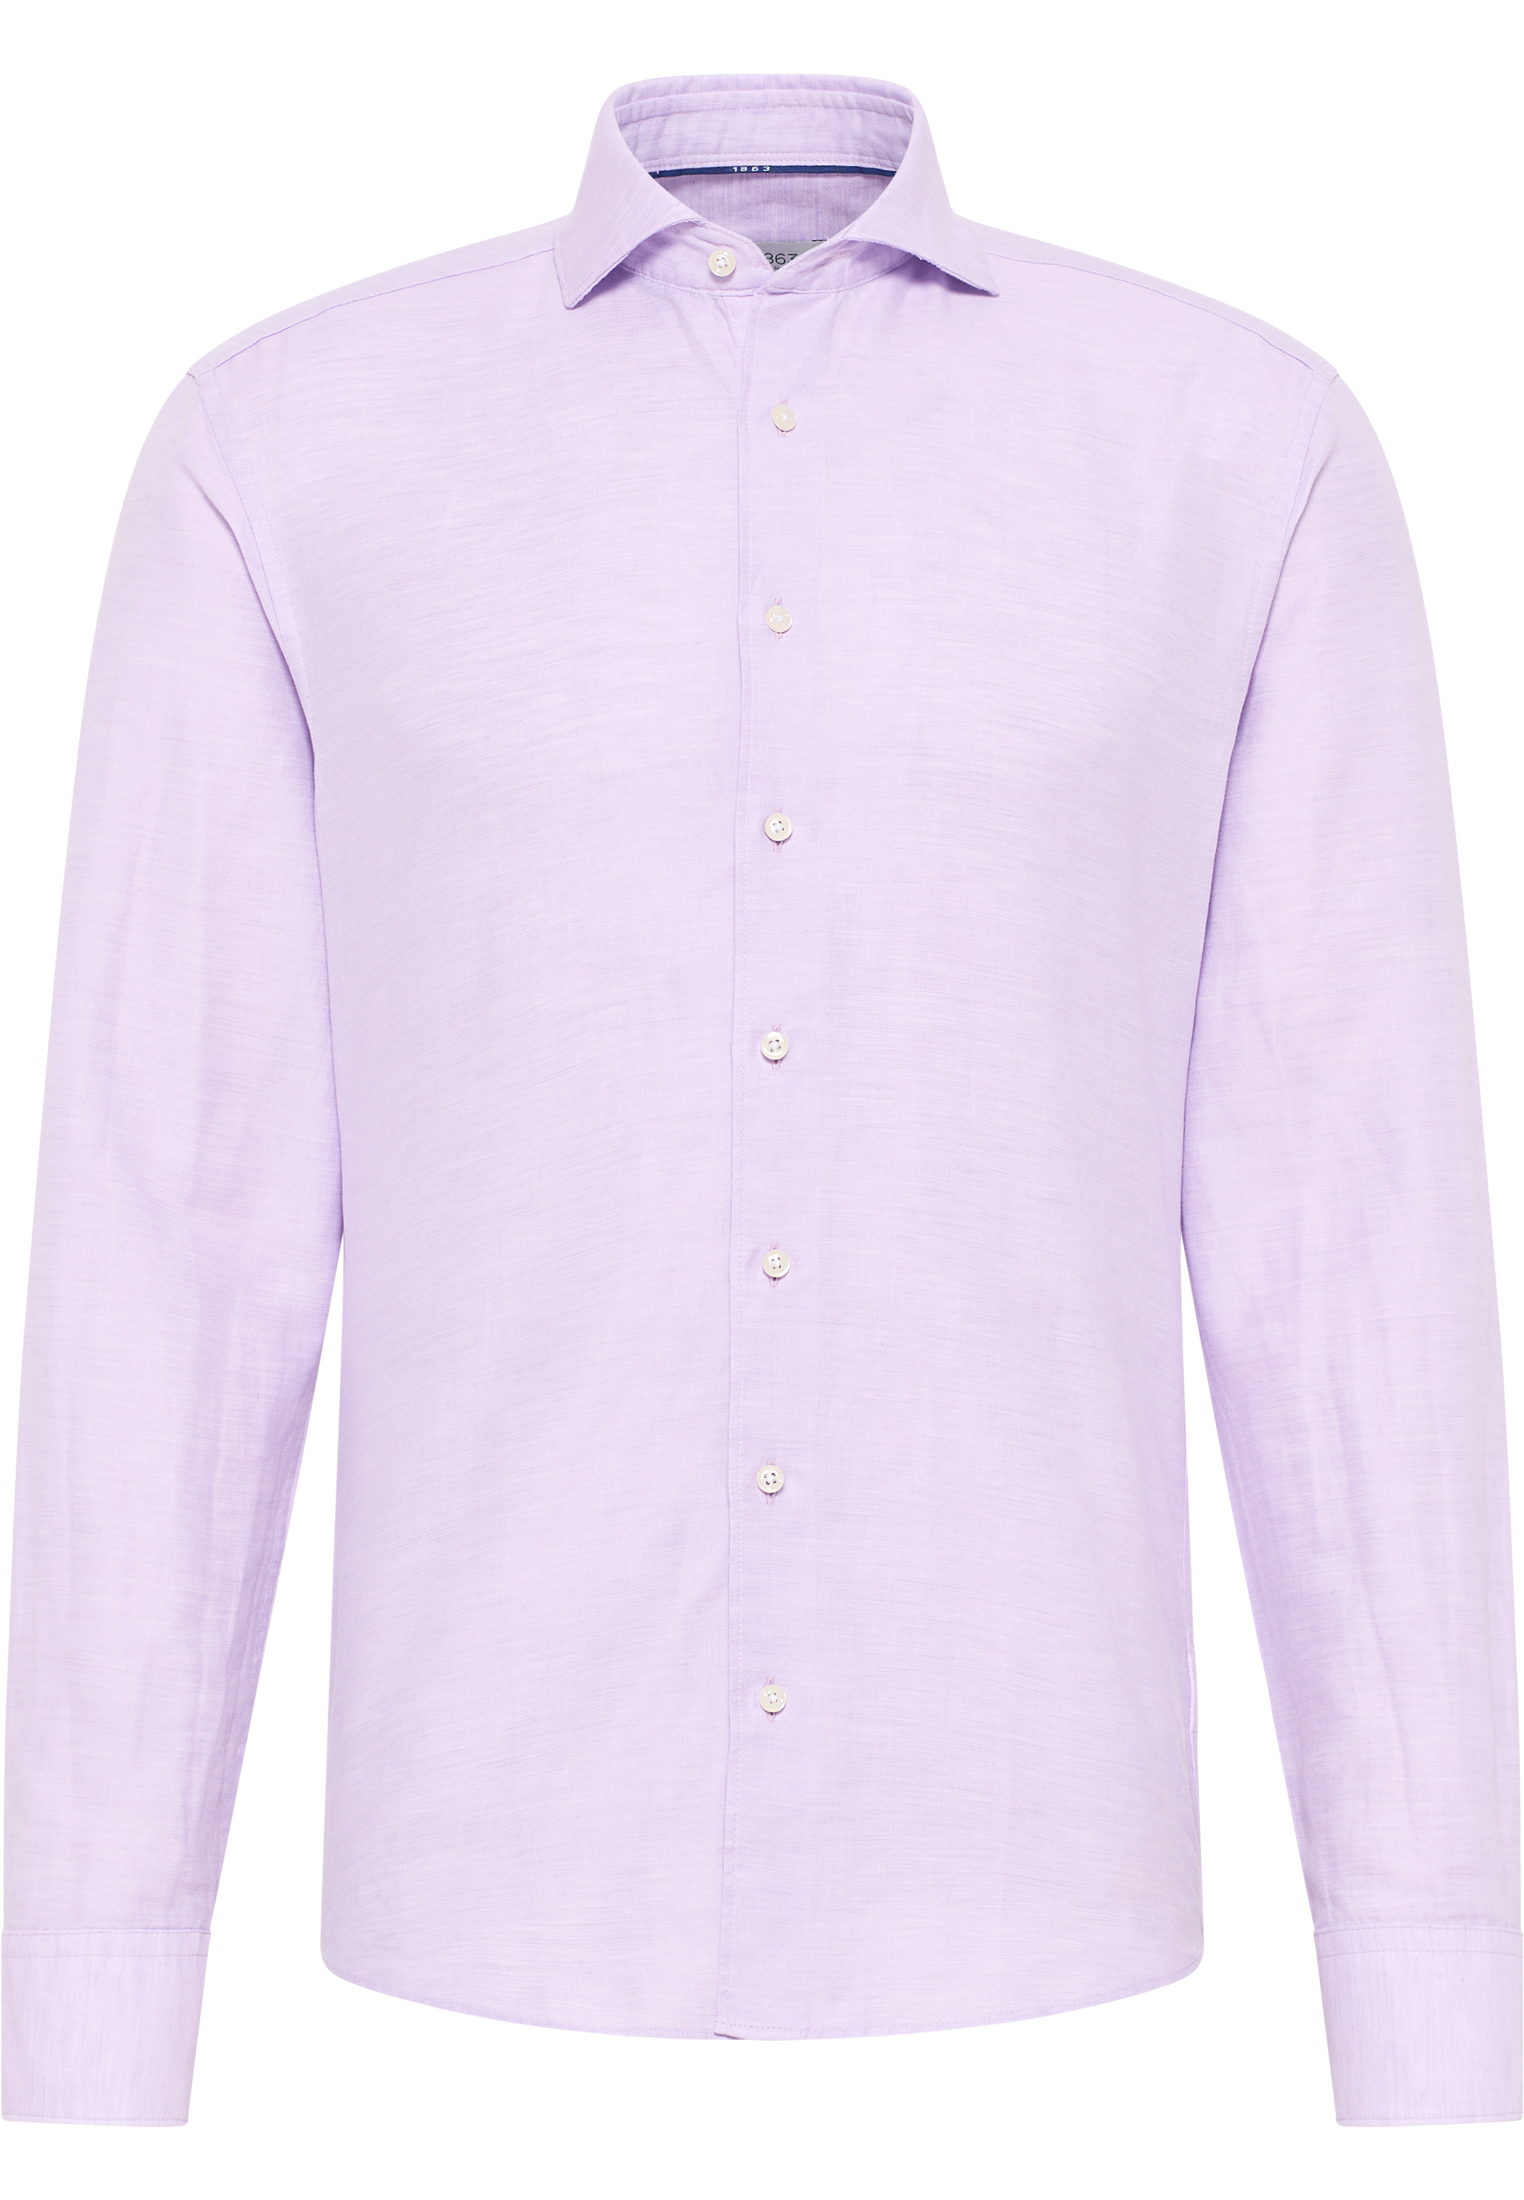 SLIM FIT Linen Shirt in lavender plain